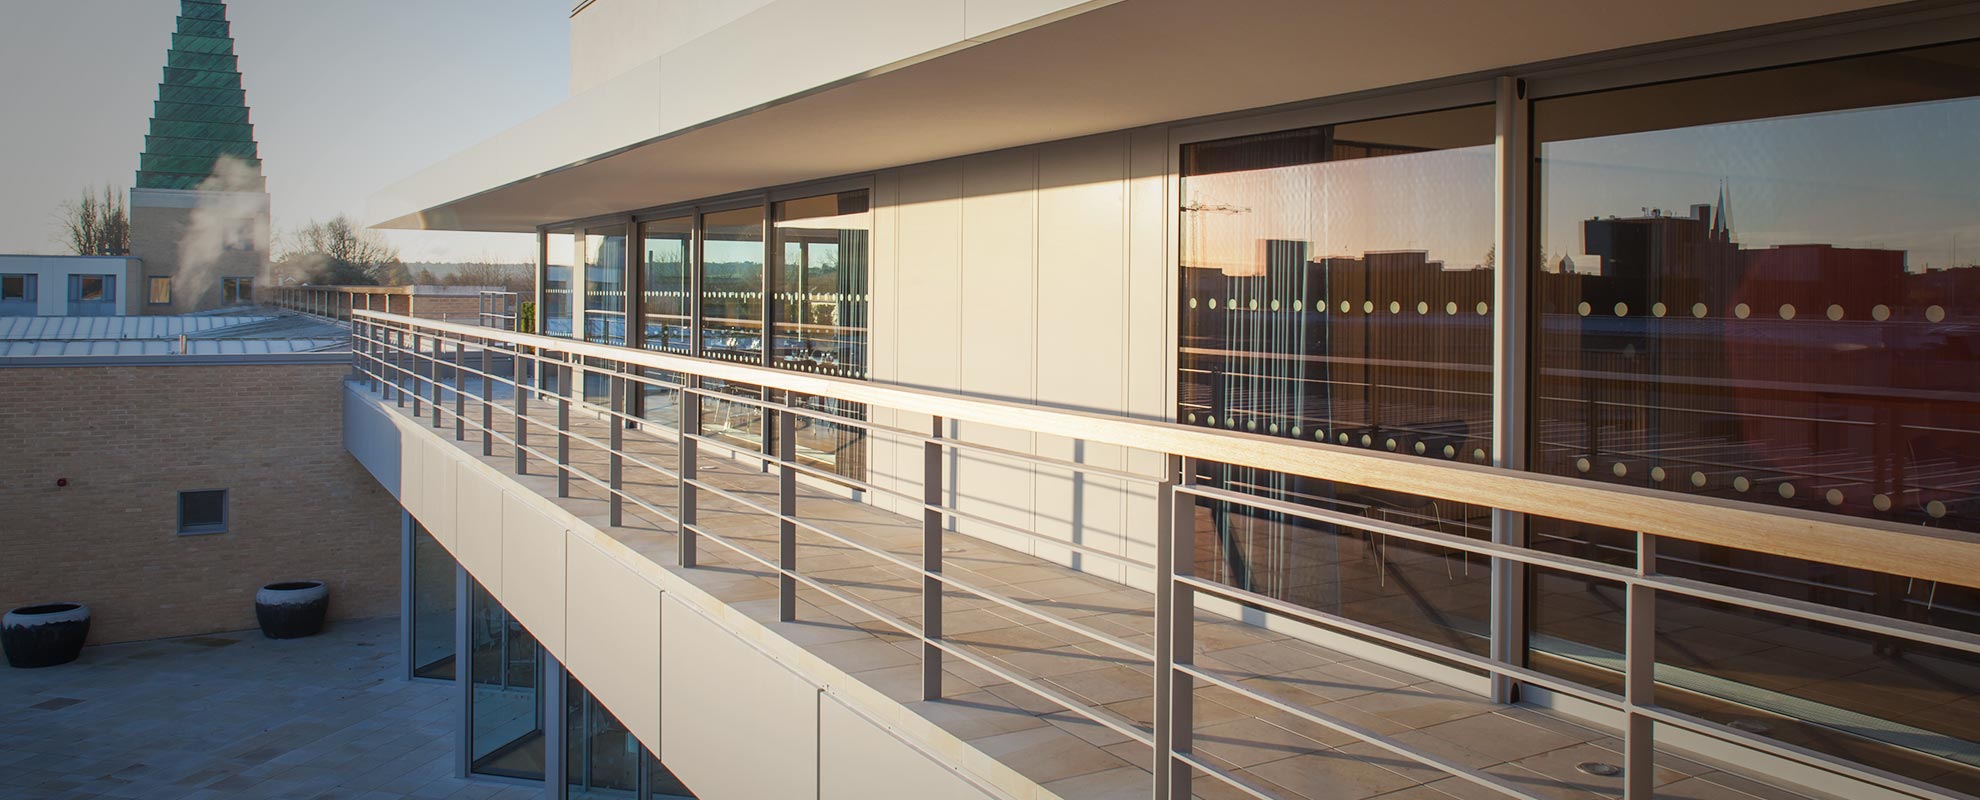 Wide span of aluminium sliding doors that lead onto a balcony